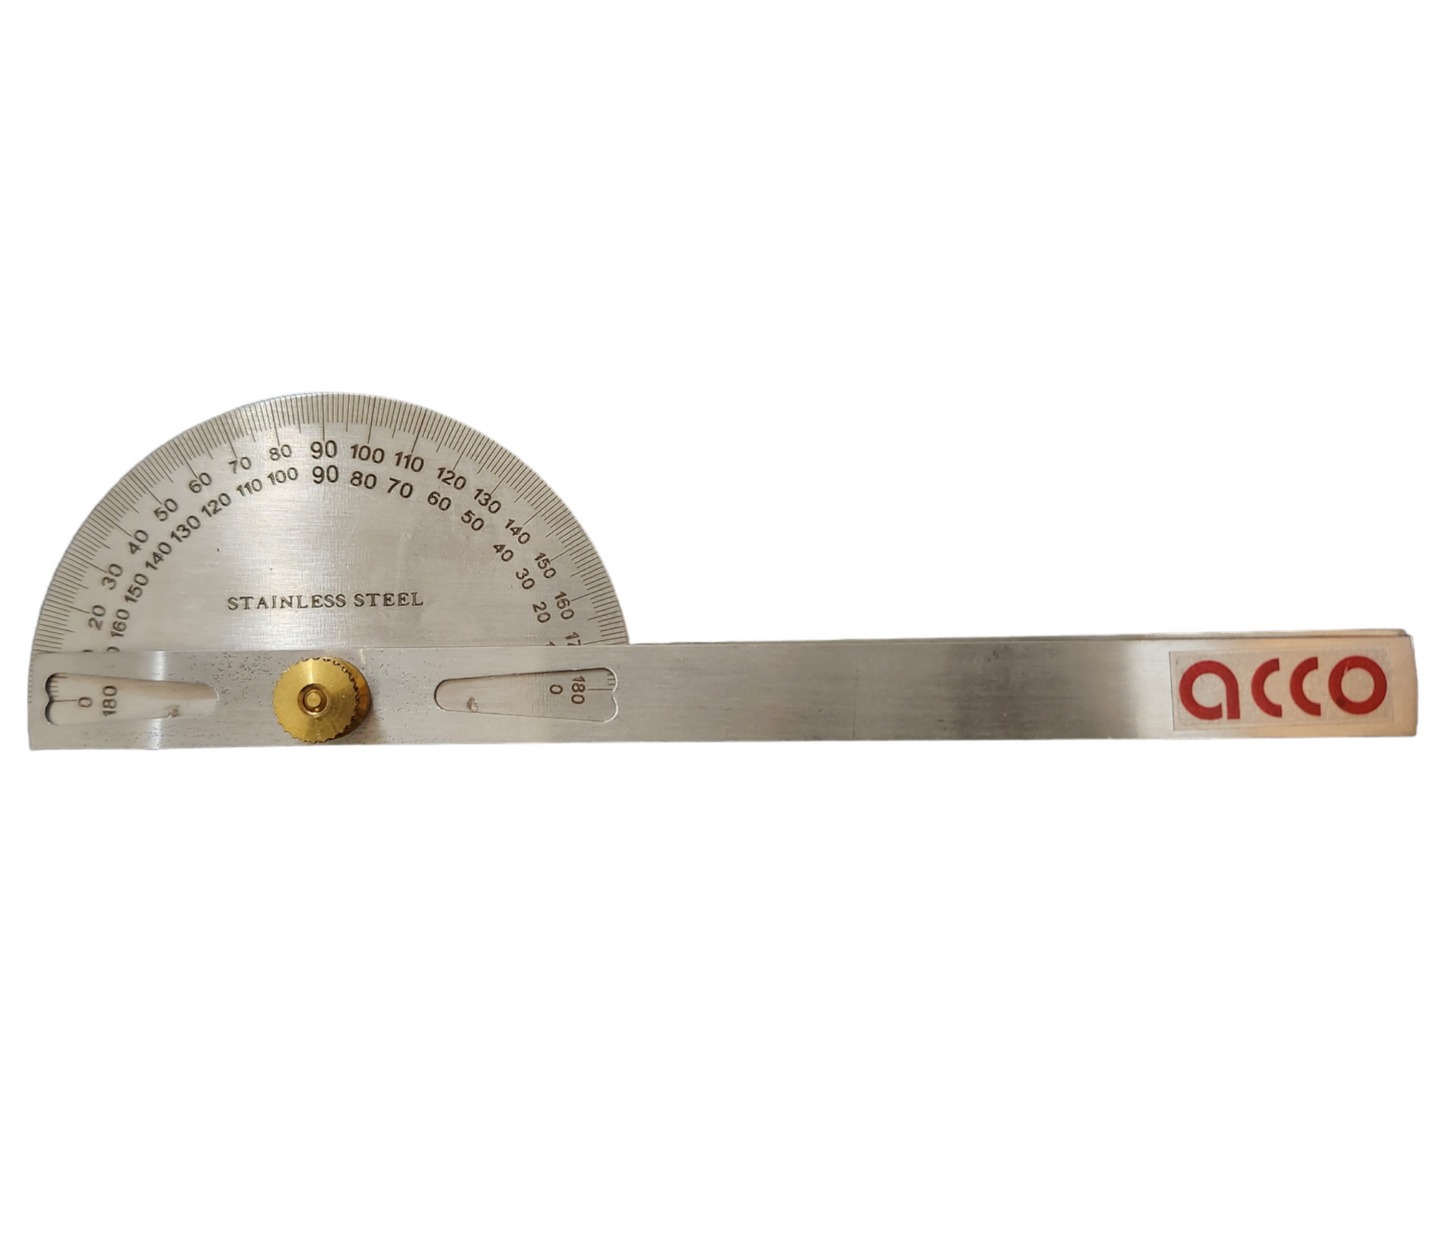 acco Metal Goniometer For Range Of Motion Set of 3